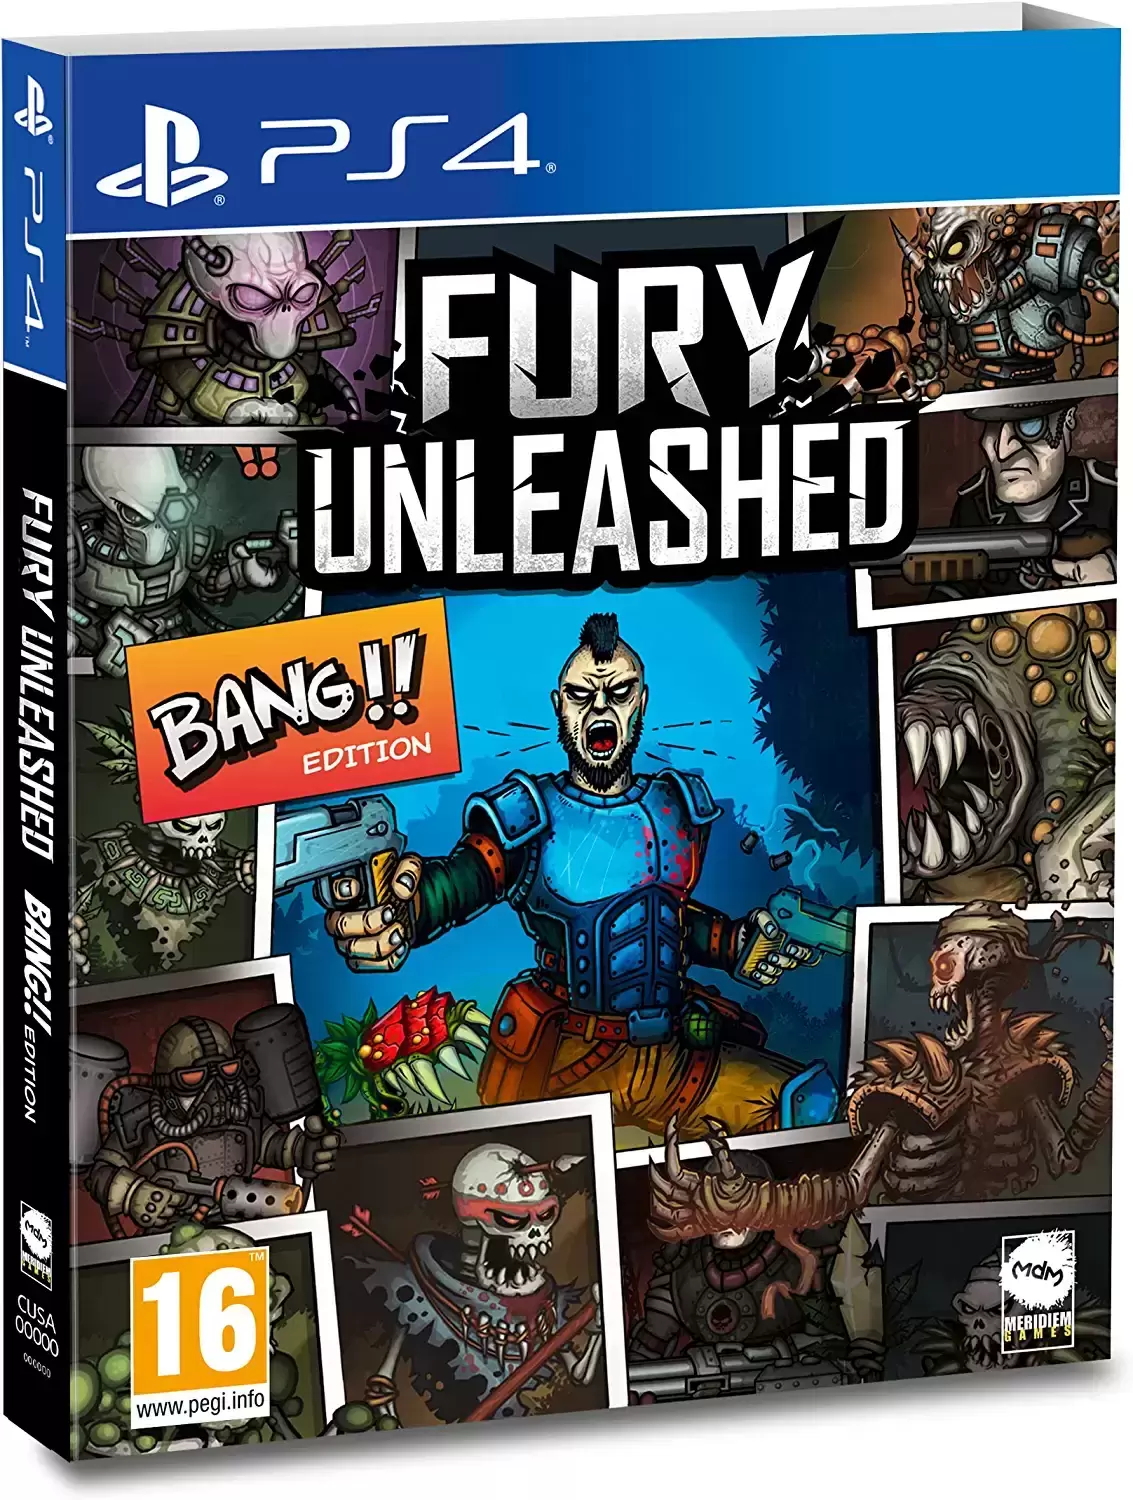 PS4 Games - Fury Unleashed - Bang !! Edition